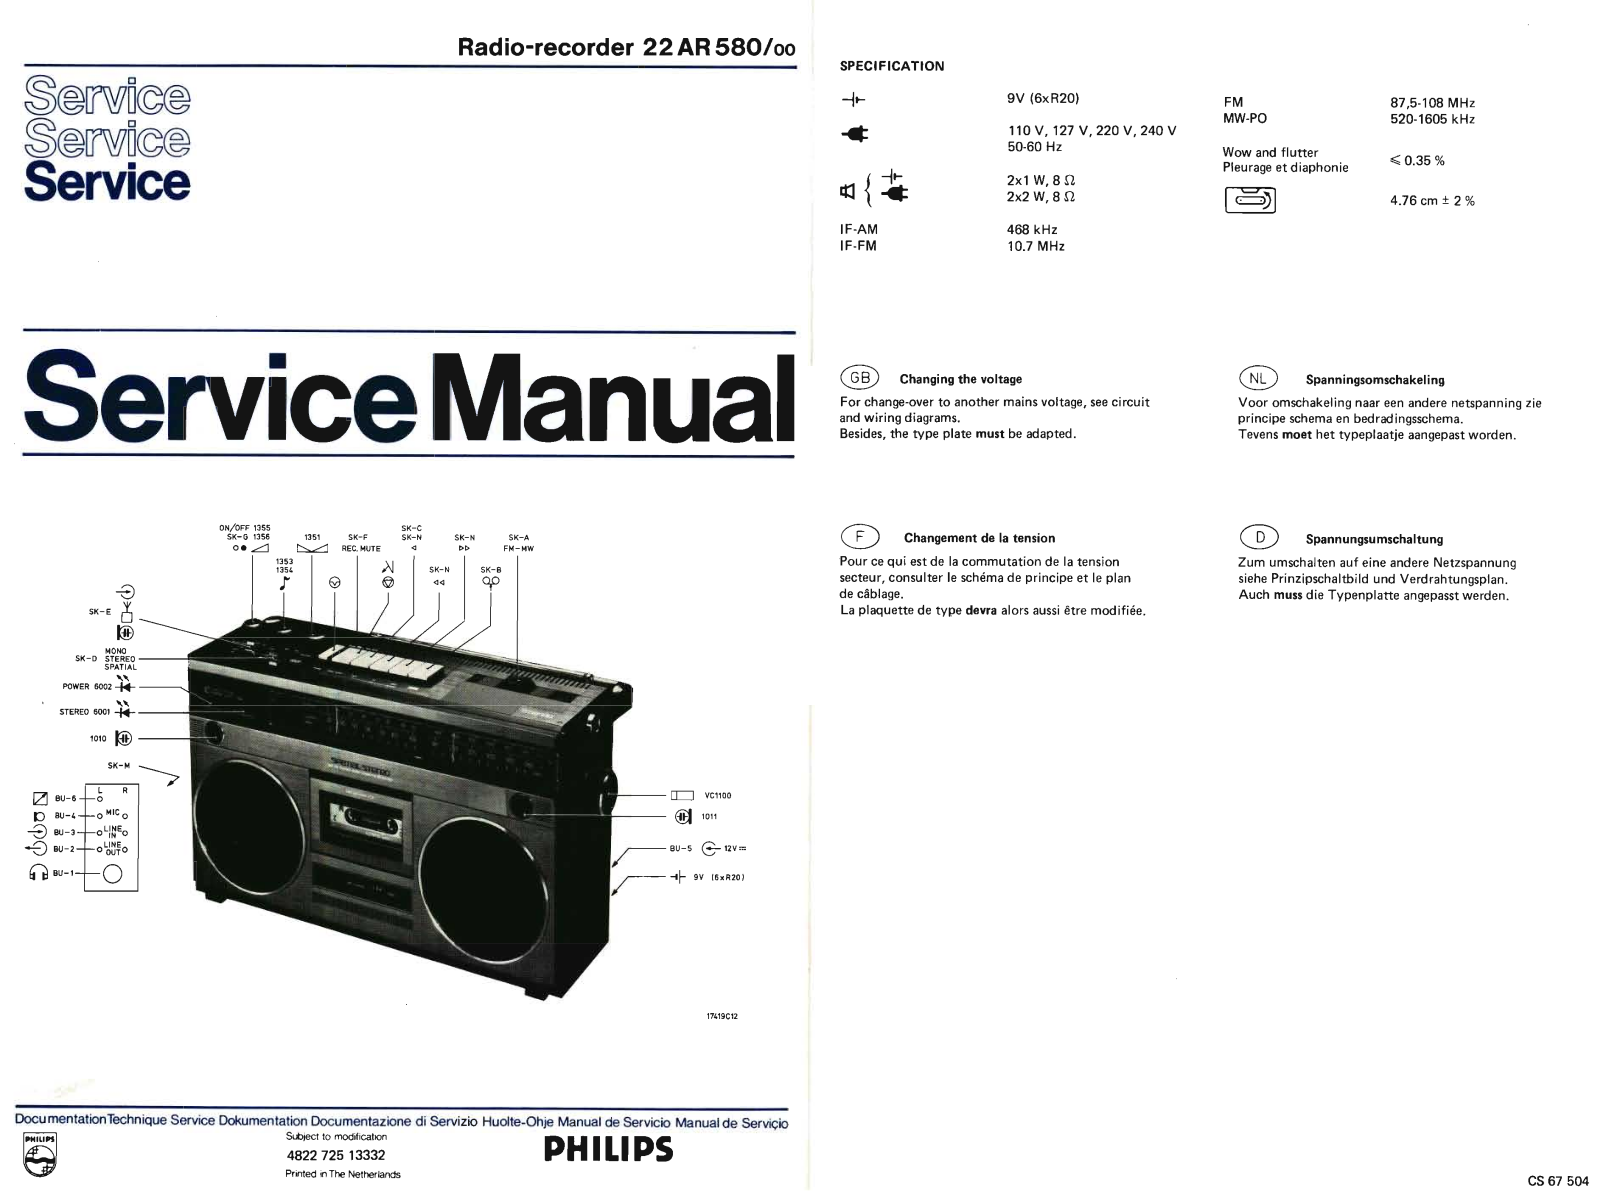 Philips 22-AR-580 Service Manual